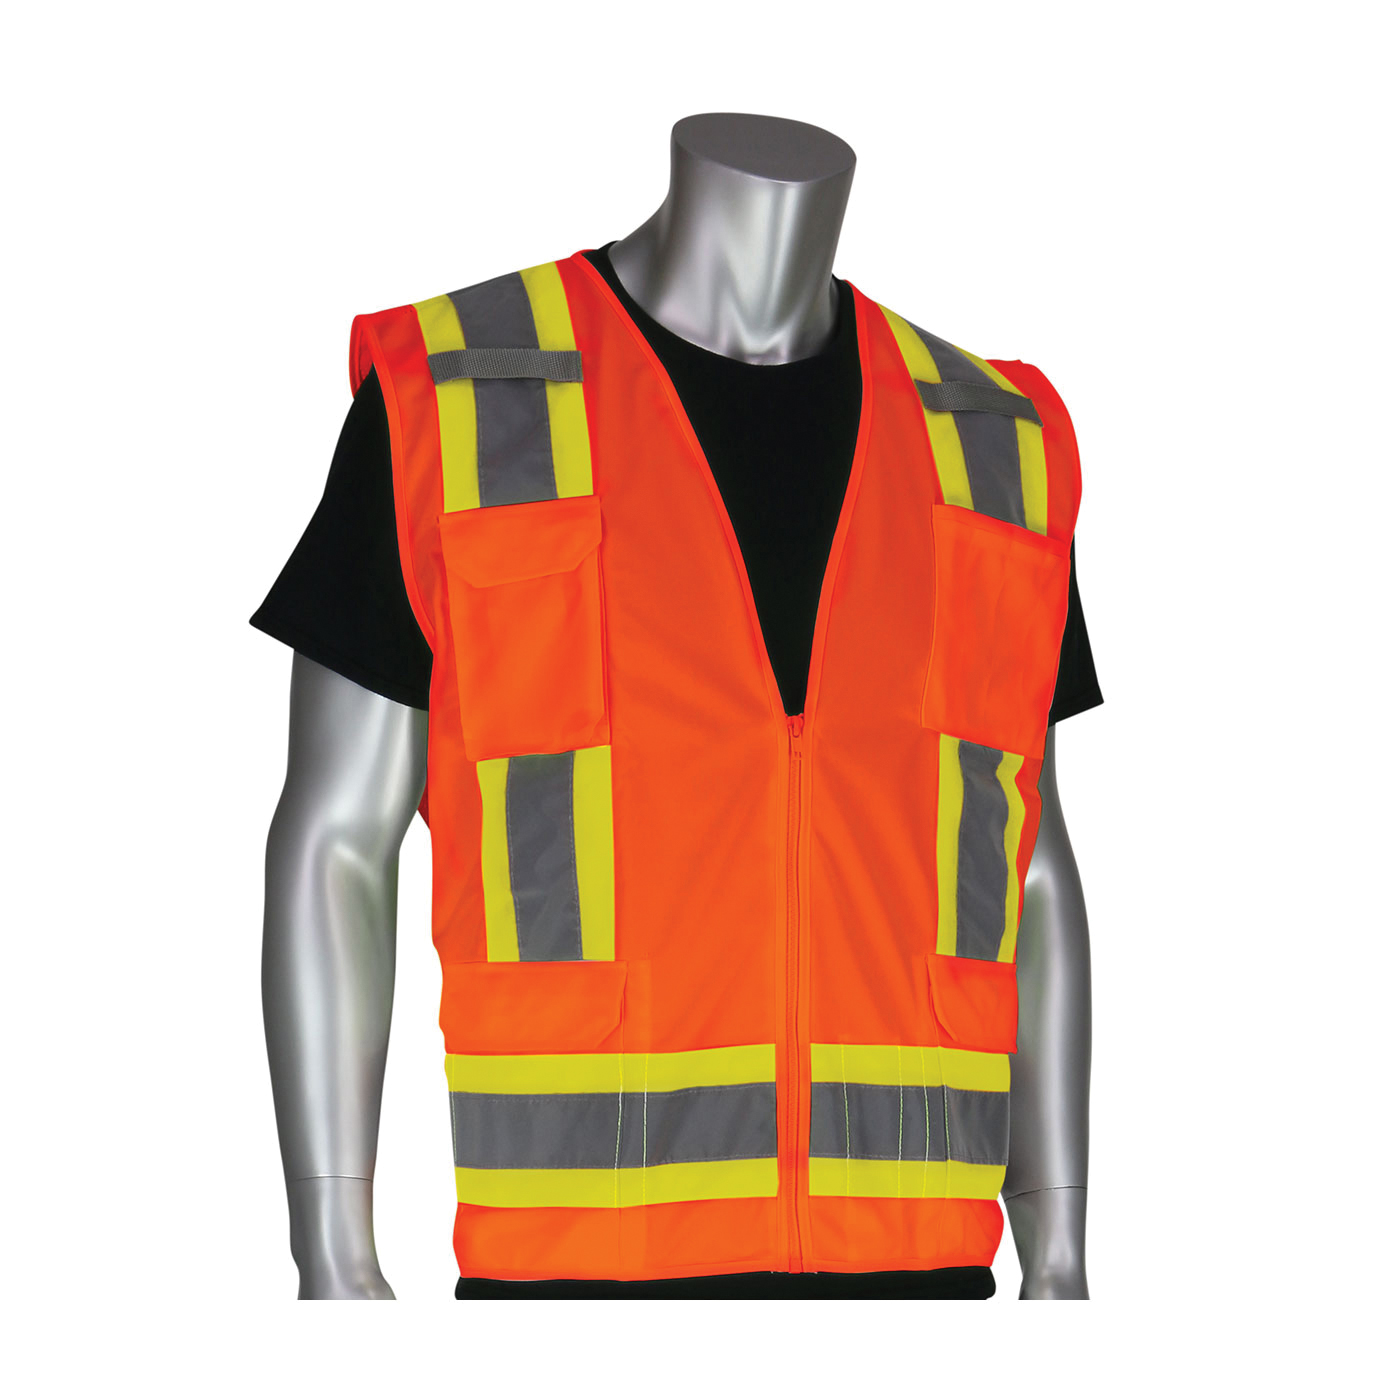 PIP® 302-0500-ORG/5X 2-Tone Surveyor Safety Vest, 5XL, Hi-Viz Orange, Polyester/Solid Tricot, Zipper Closure, 11 Pockets, ANSI Class: Class 2, Specifications Met: ANSI 107 Type R